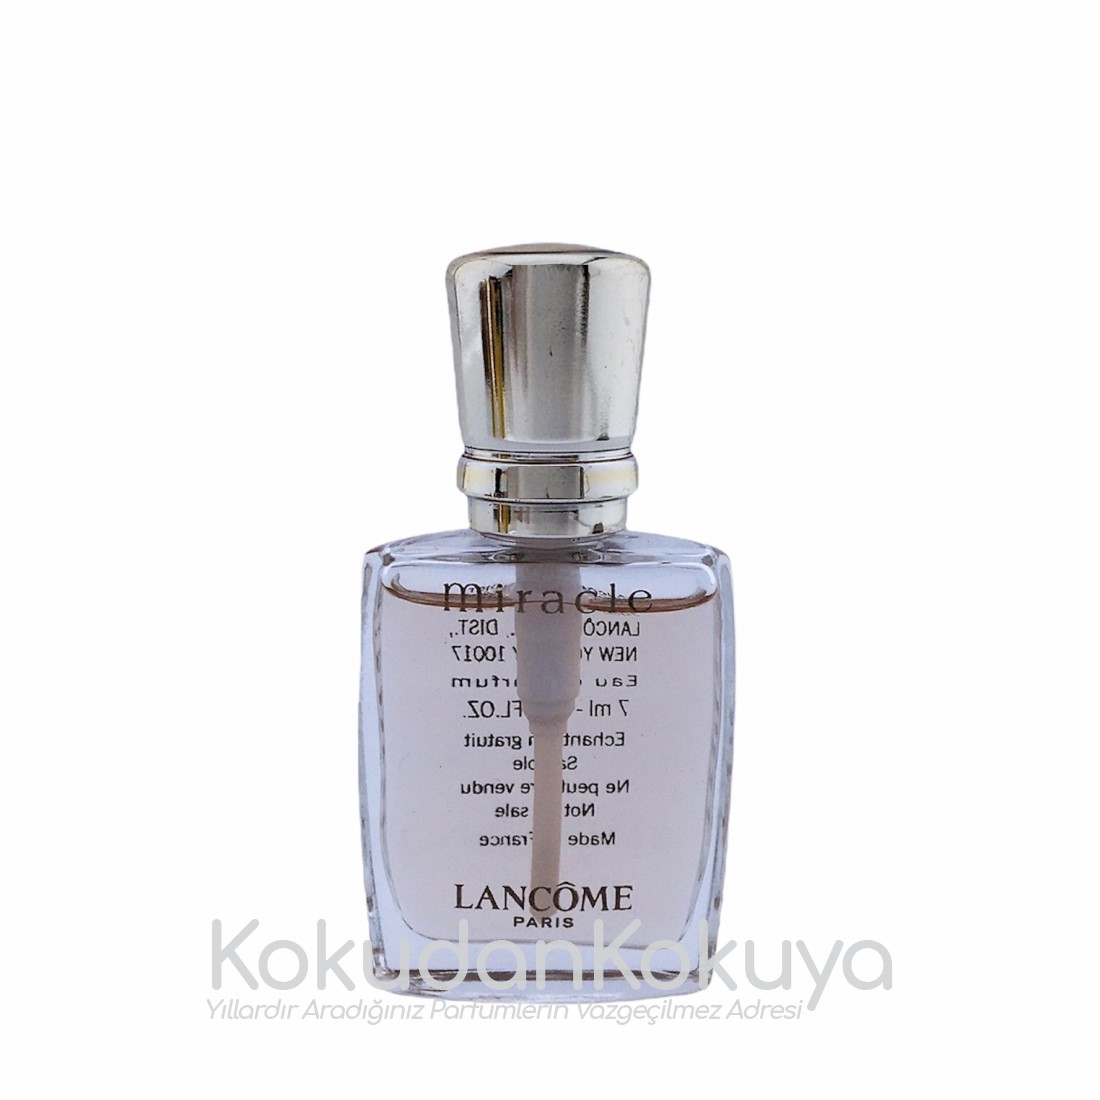 LANCOME Miracle (Vintage) Parfüm Kadın 7ml Minyatür (Mini Perfume) Sprey 